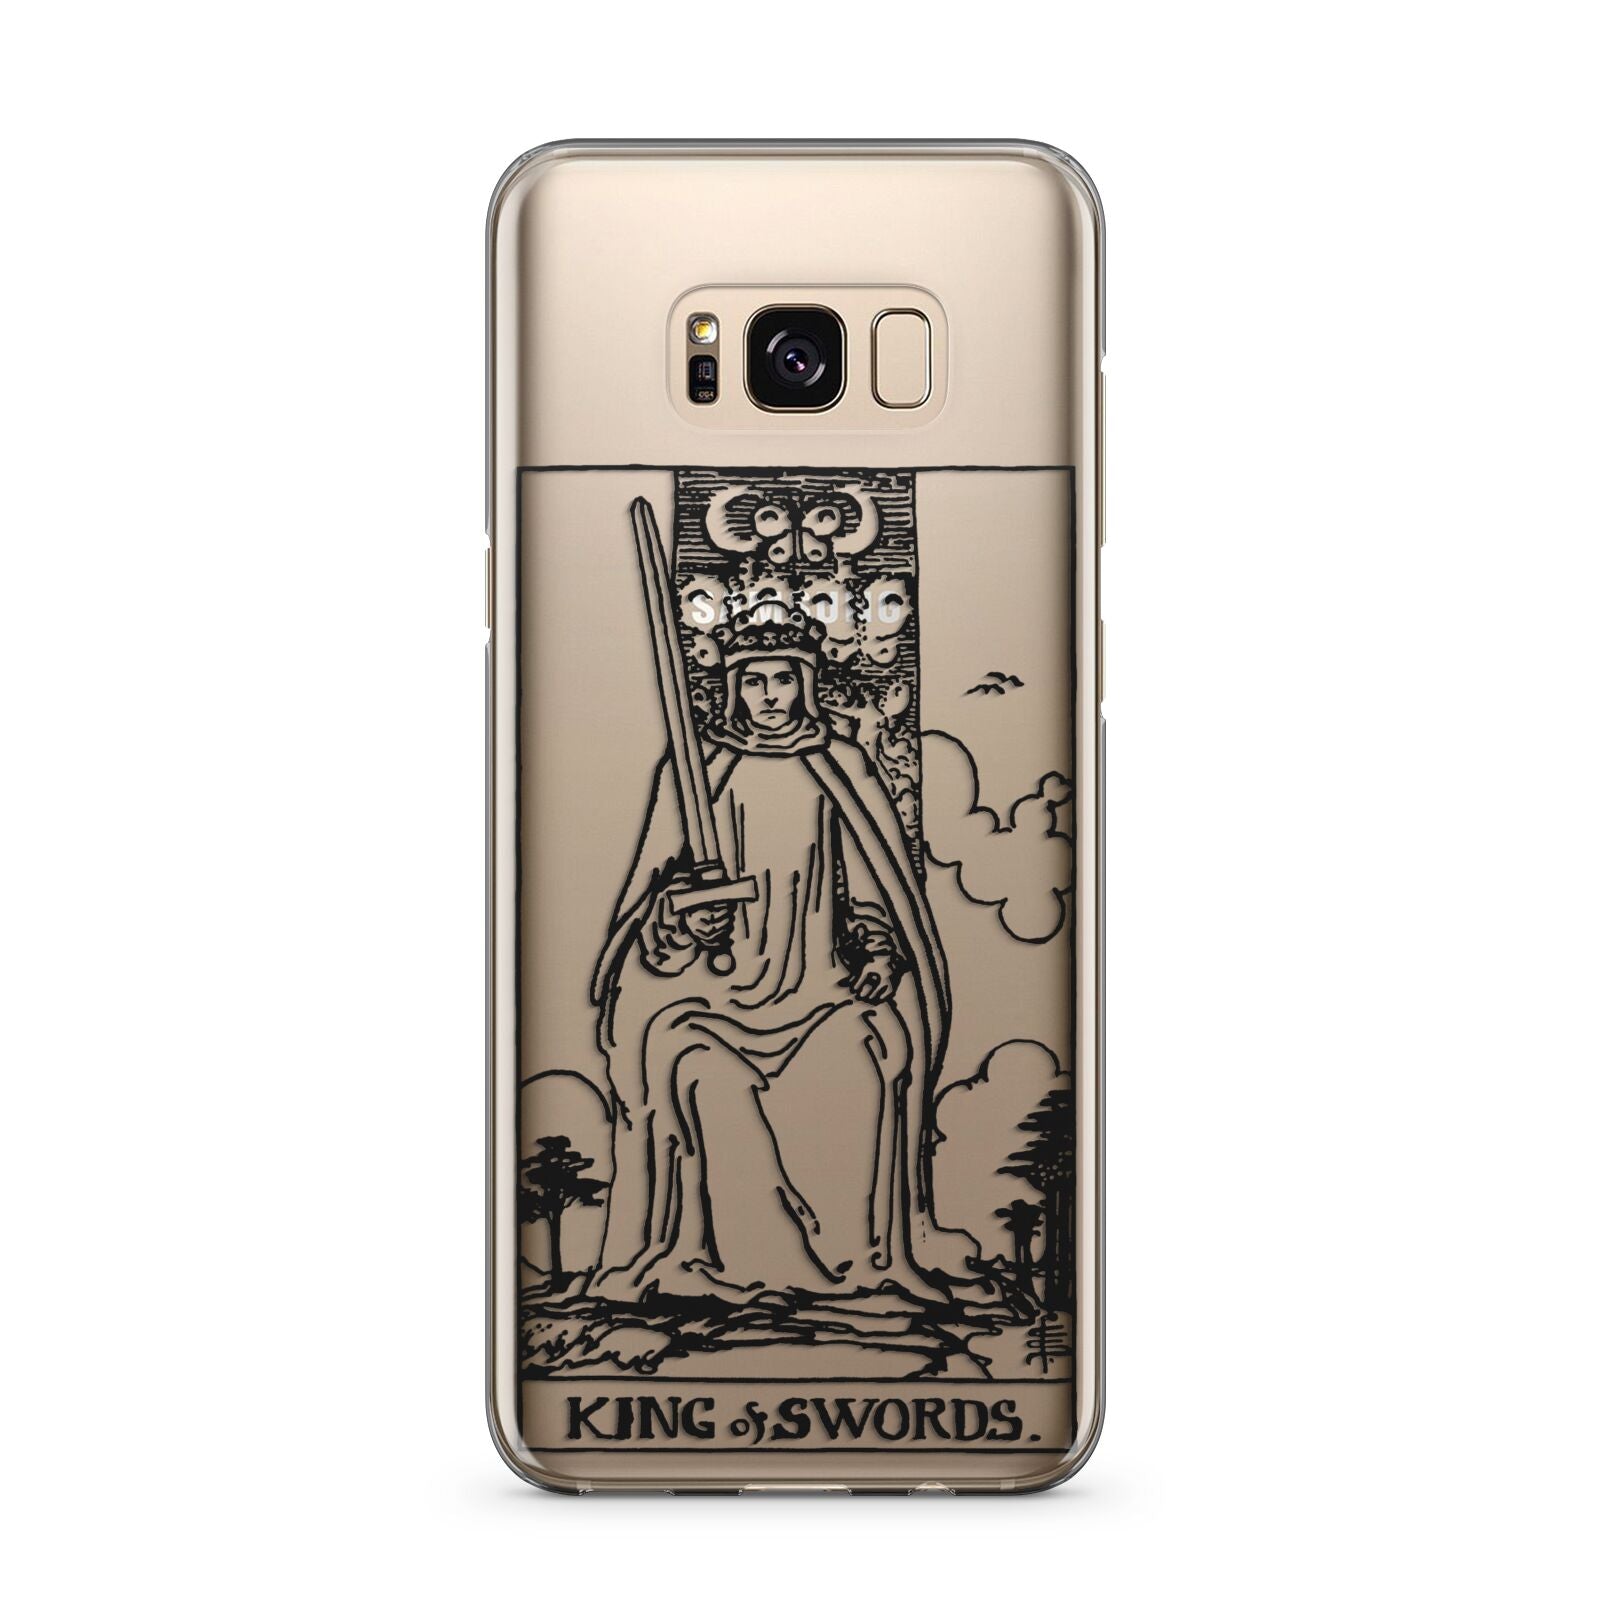 King of Swords Monochrome Samsung Galaxy S8 Plus Case